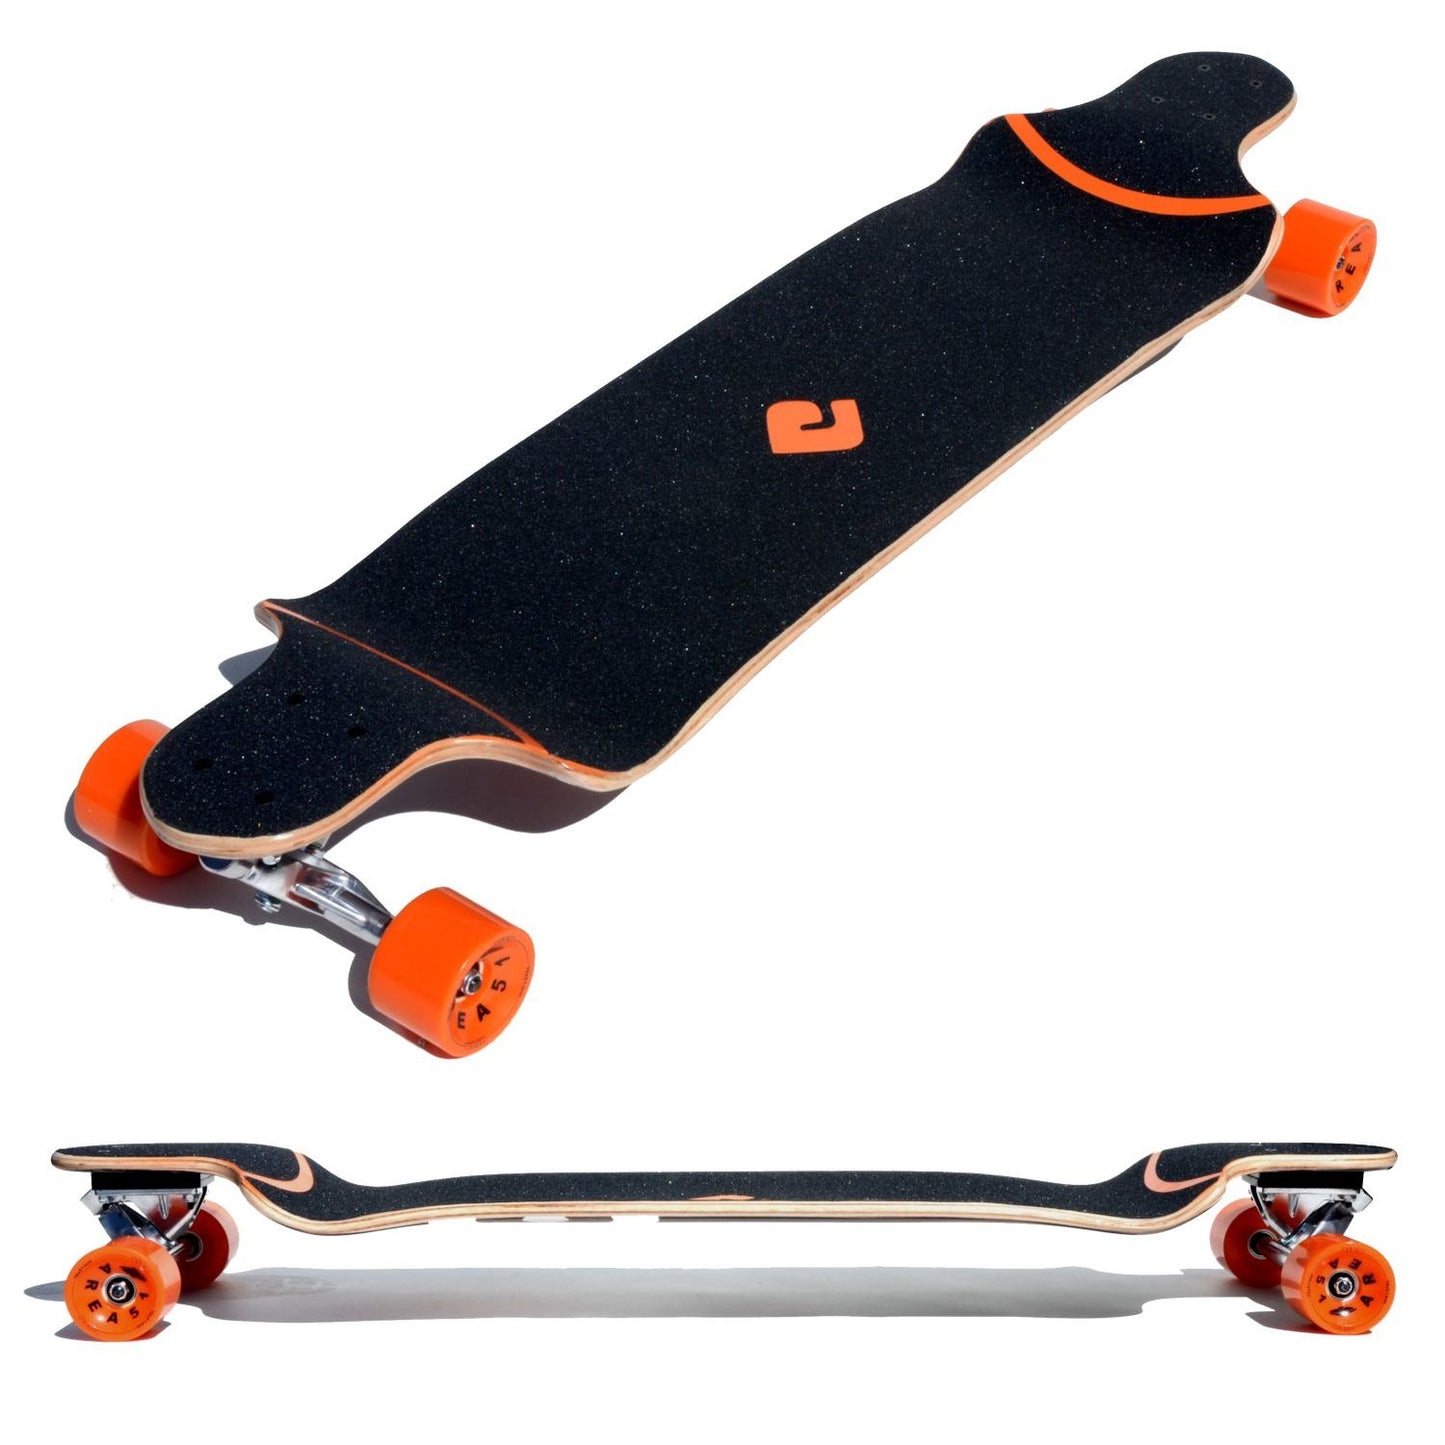 Atom Drop Deck Longboard - 41 Inch - Orange